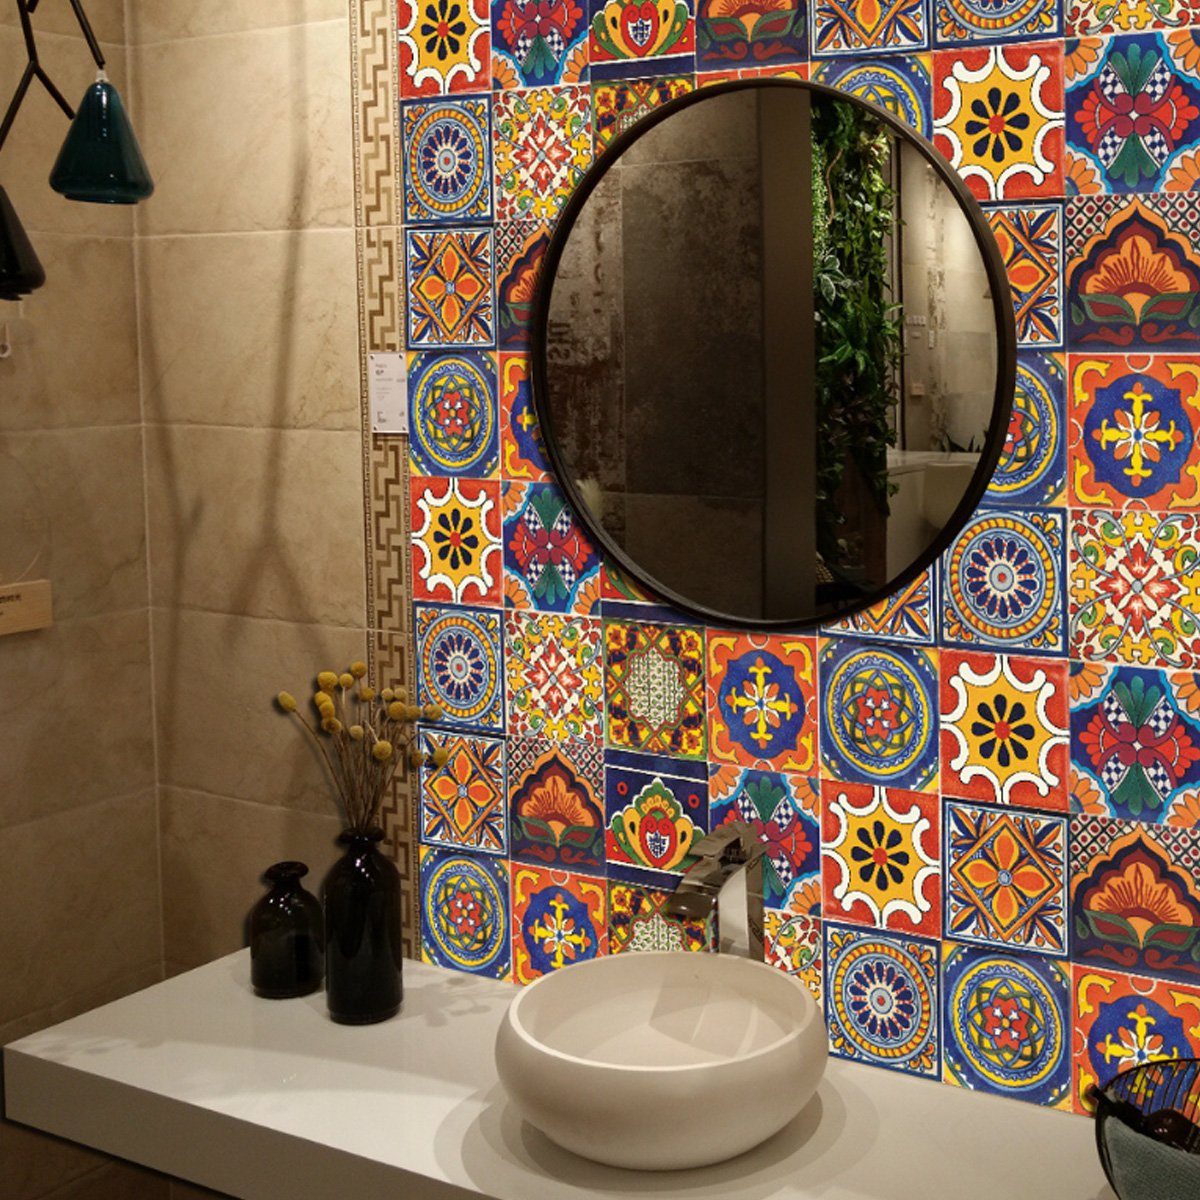 Wandfliese Jormftte Aufkleber,für Wandaufkleber,Bunt 1 Fliesenaufkleber Badezimmer Mehrfarbig Mosaik Küche